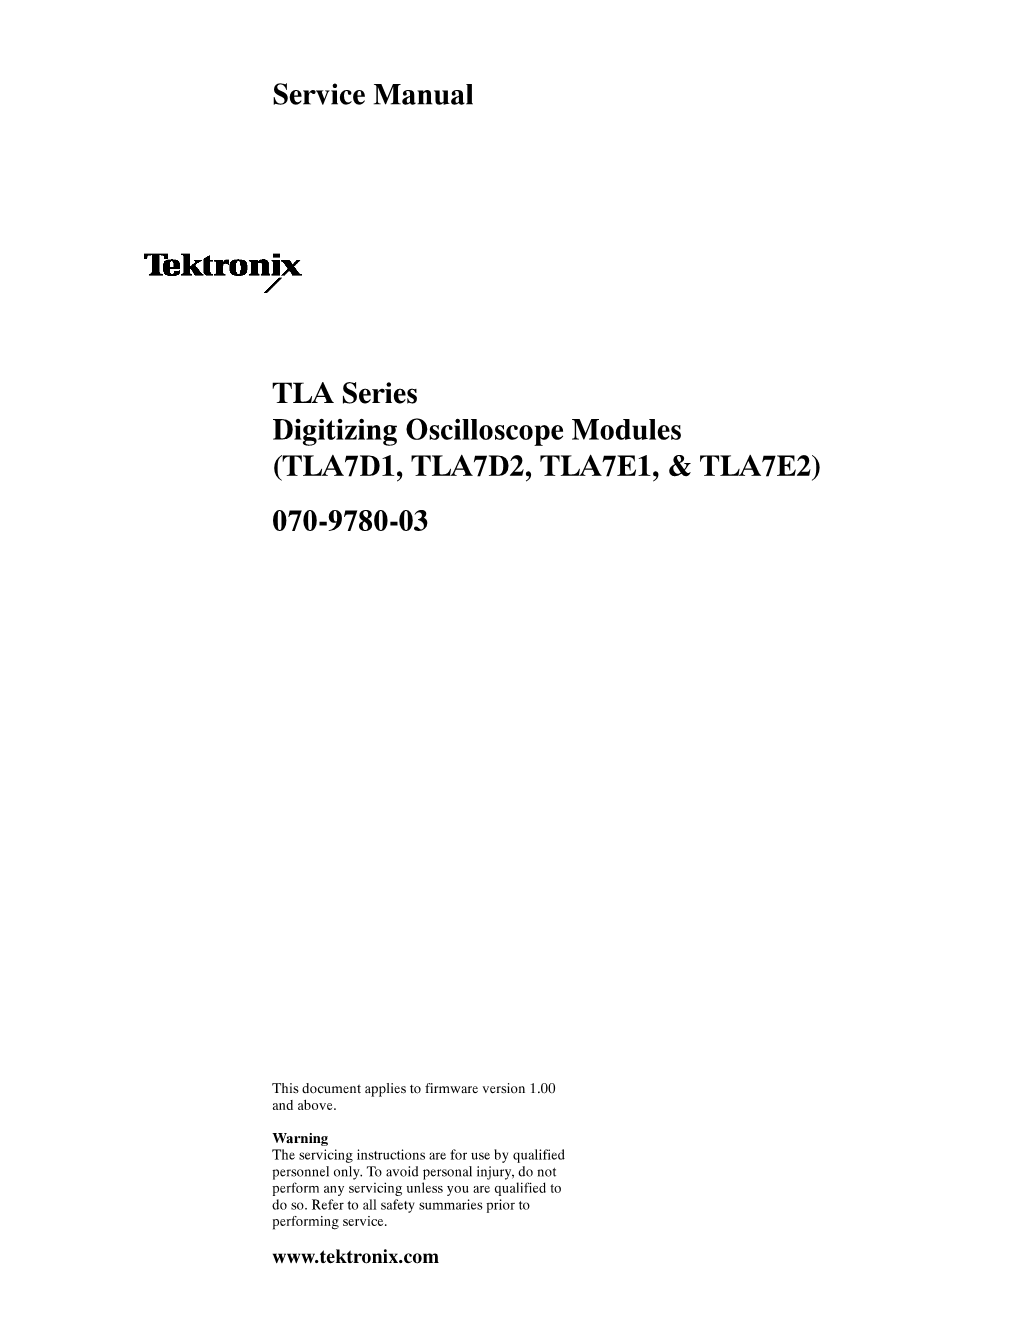 TLA Series Digitizing Oscilloscopes Modules (TLA7D1, TLA7D2, TLA7E1, & TLA7E2) Service Manual